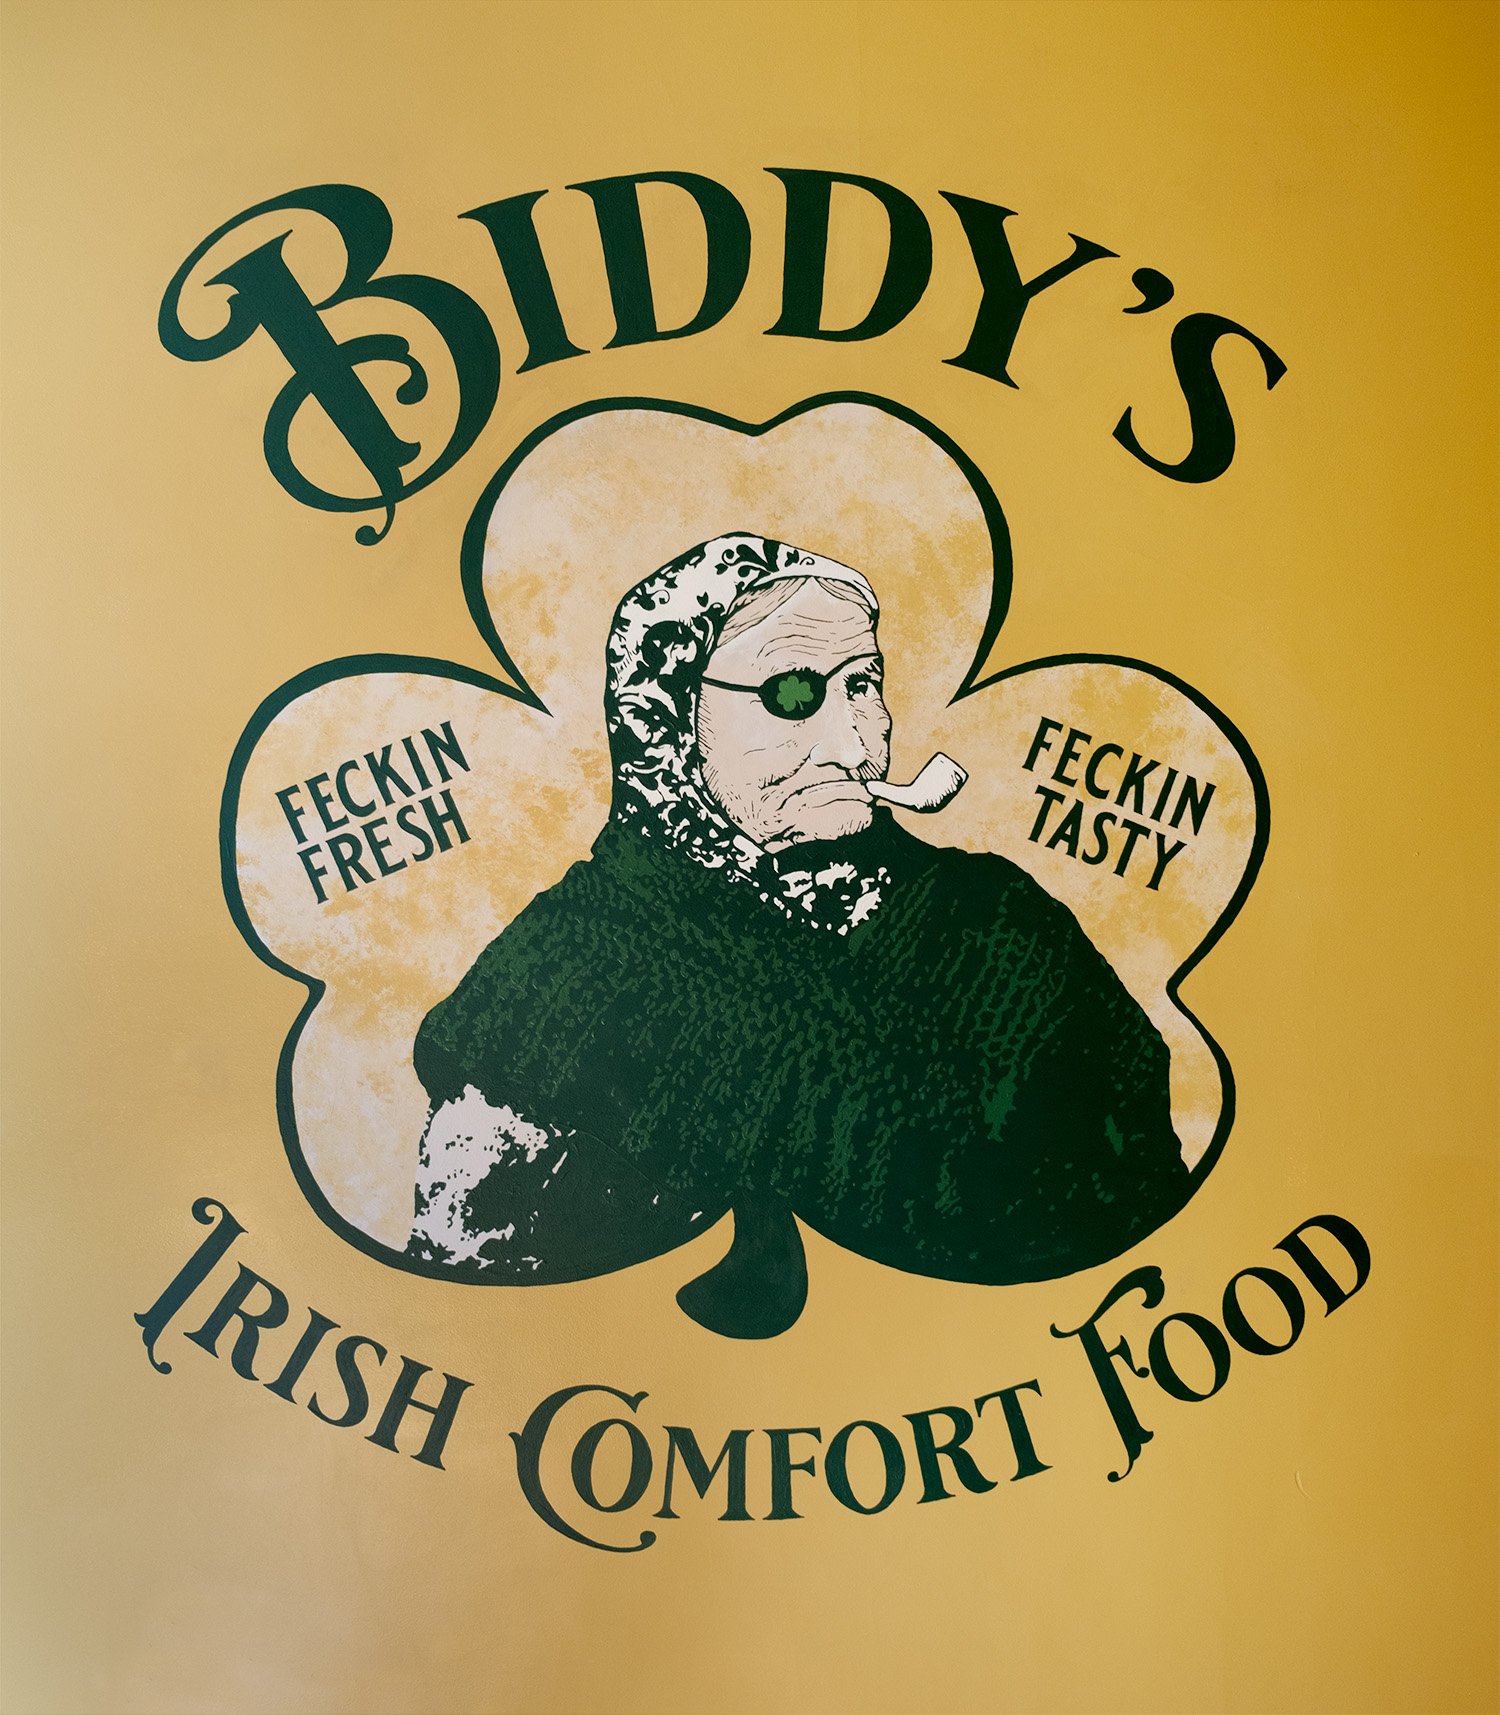 Biddy’s Irish Comfort Food Mural